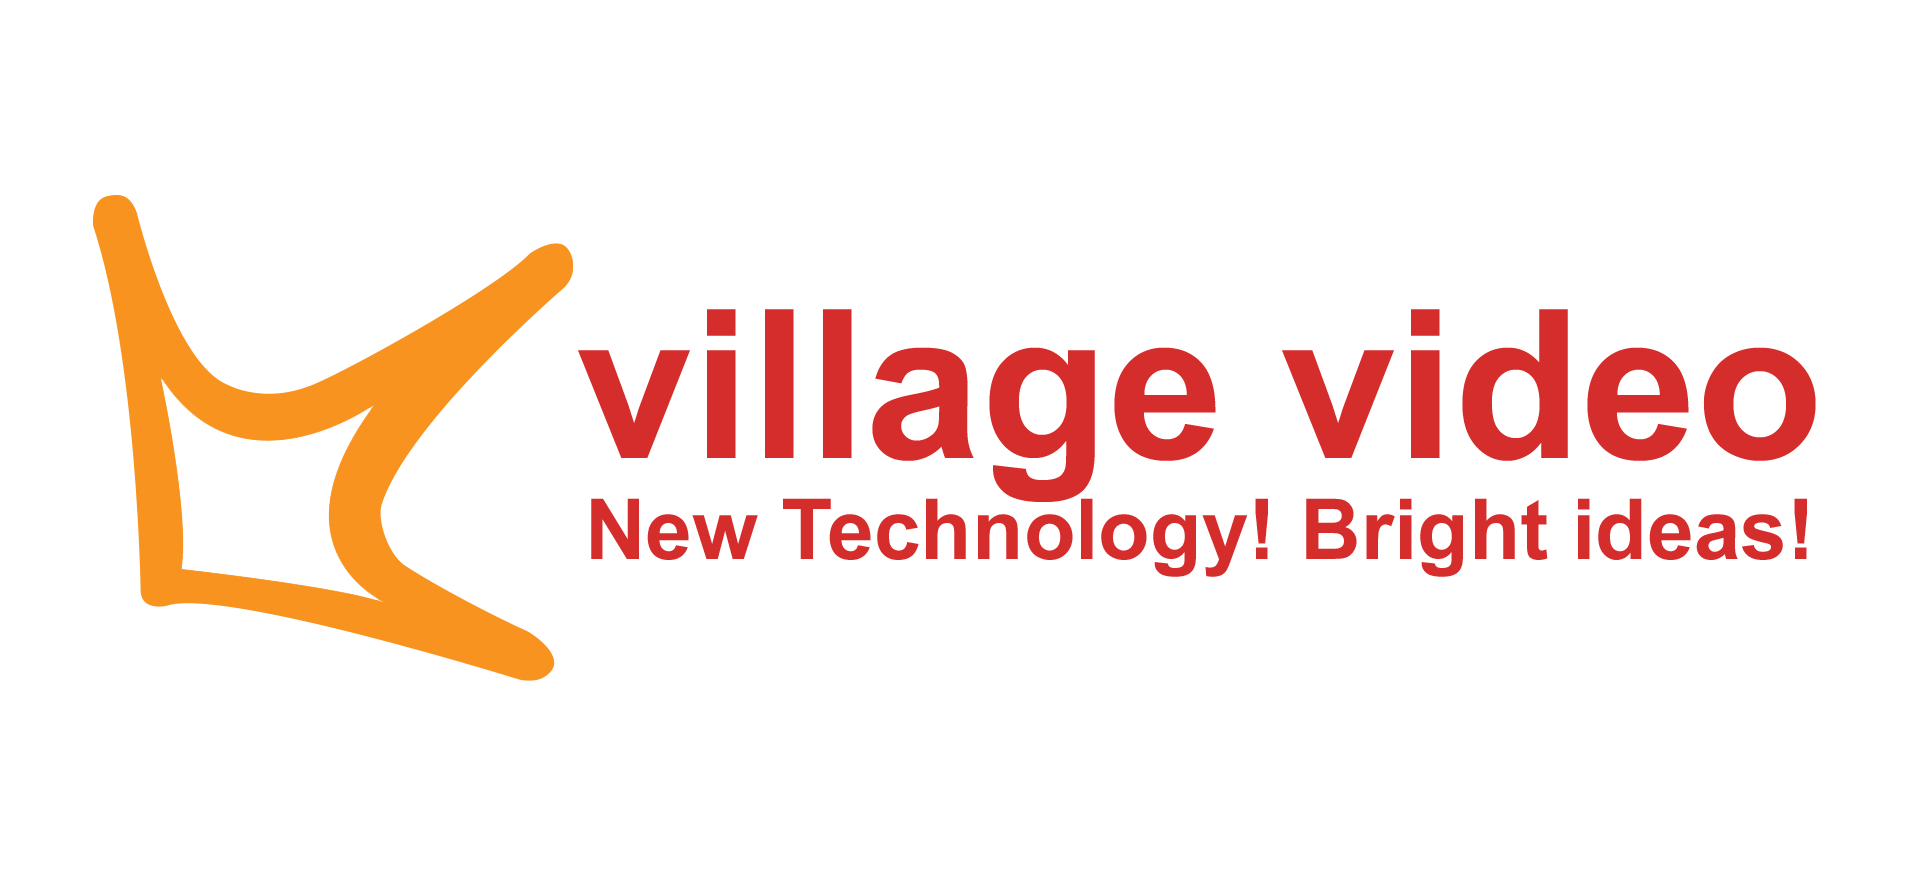 Village Video News